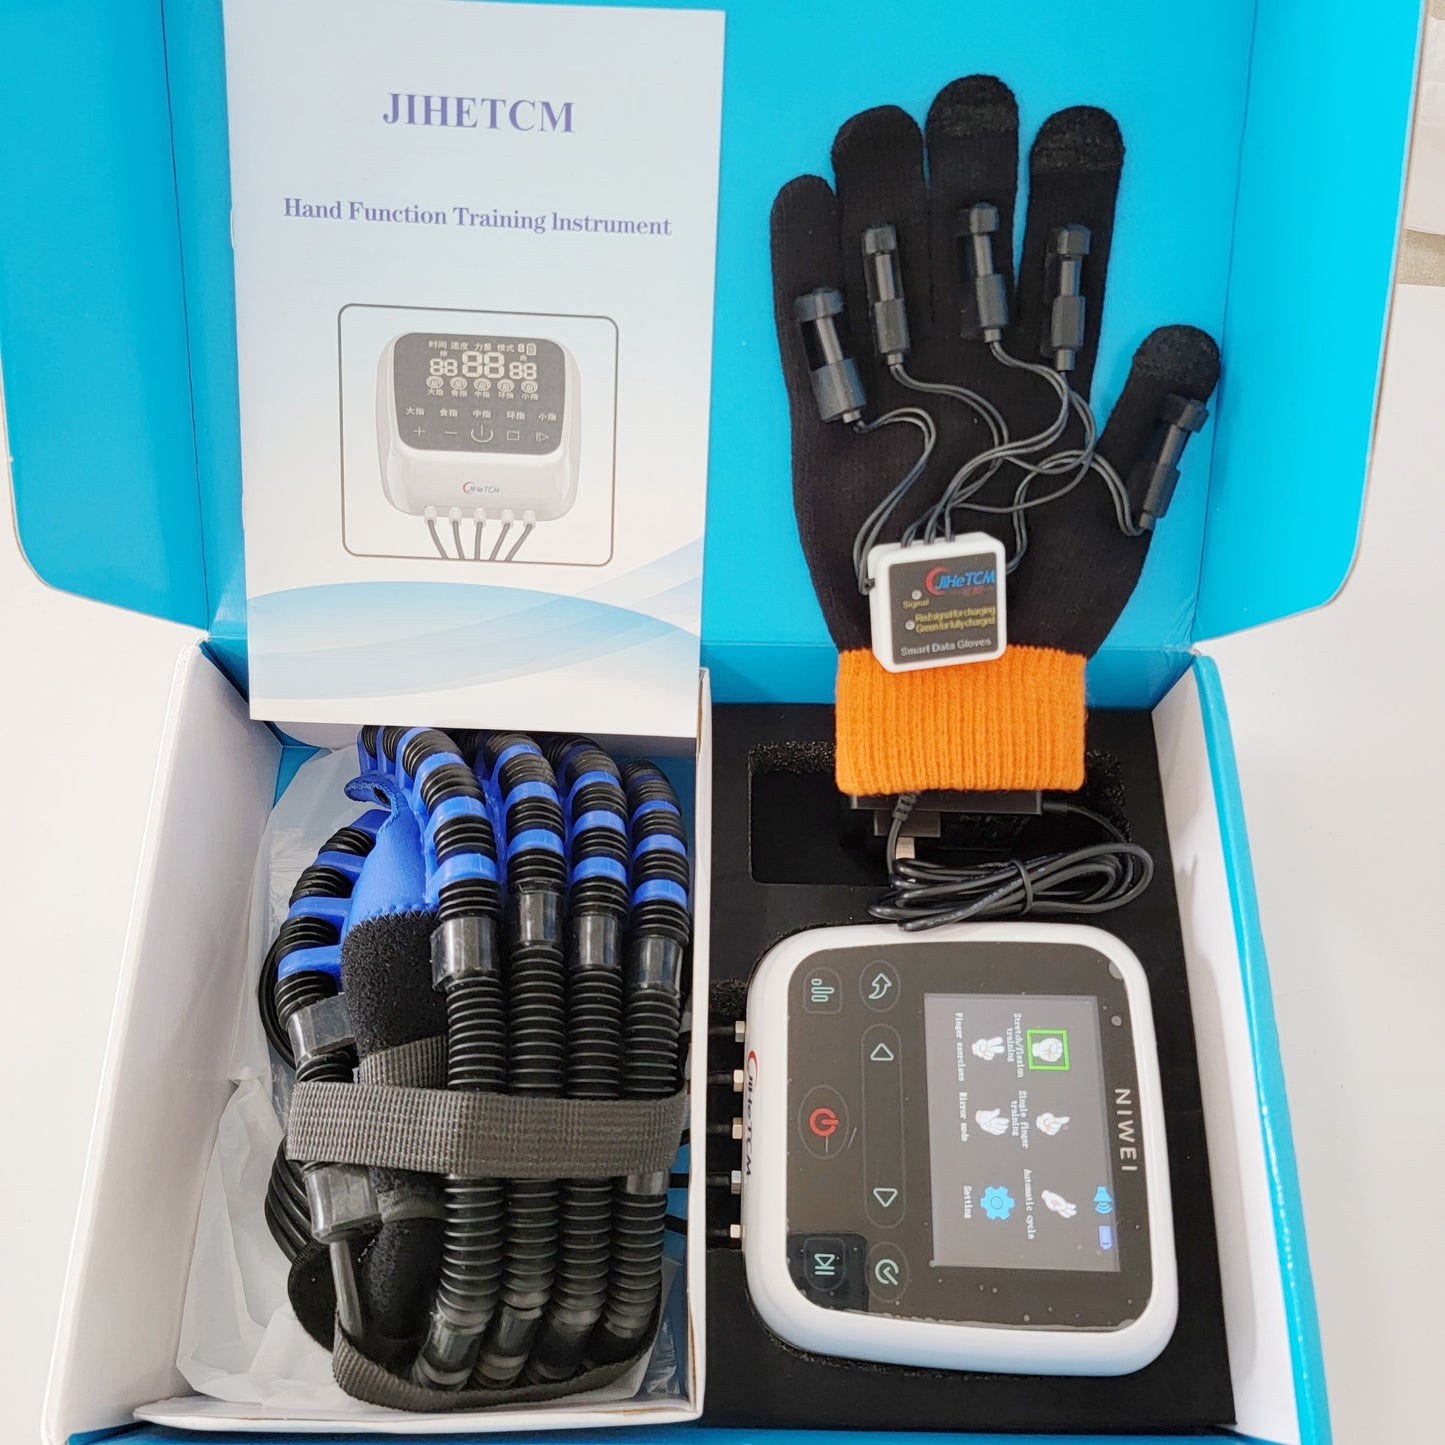 Hand Rehabilitation Robot Glove for Stroke Patients